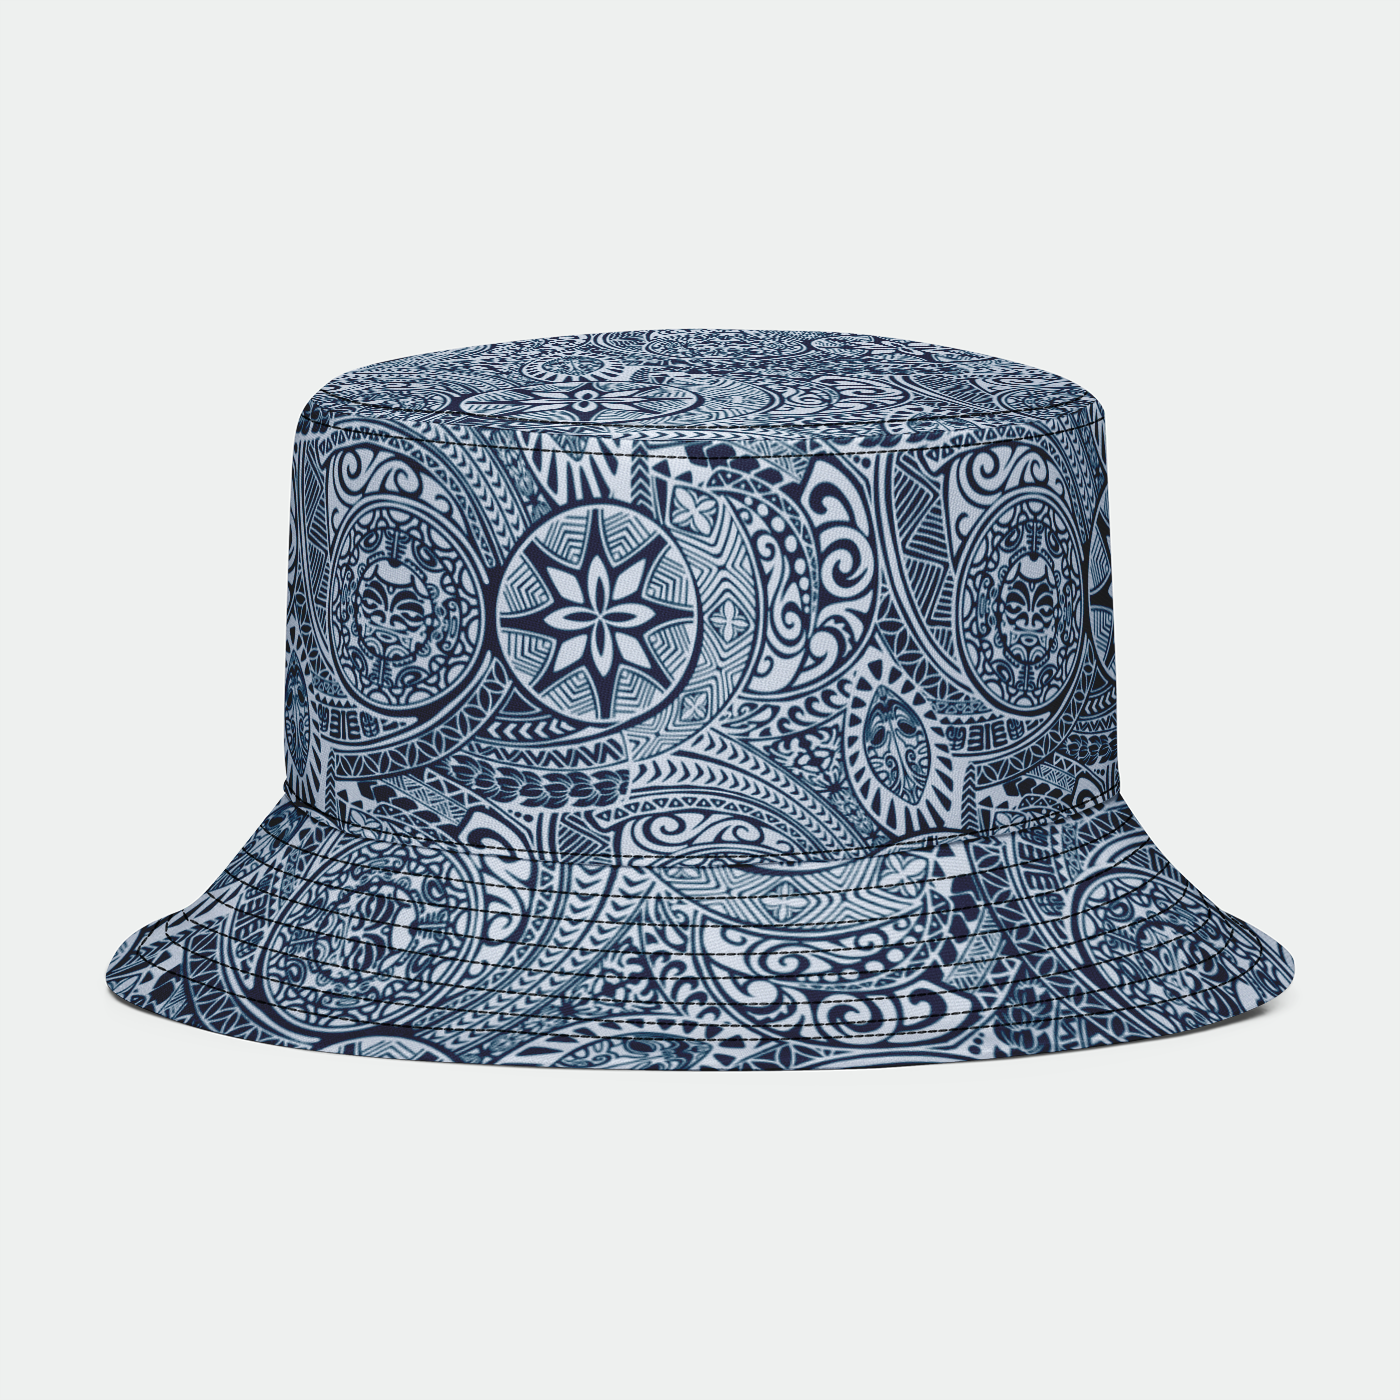 The Maui Bucket Hat